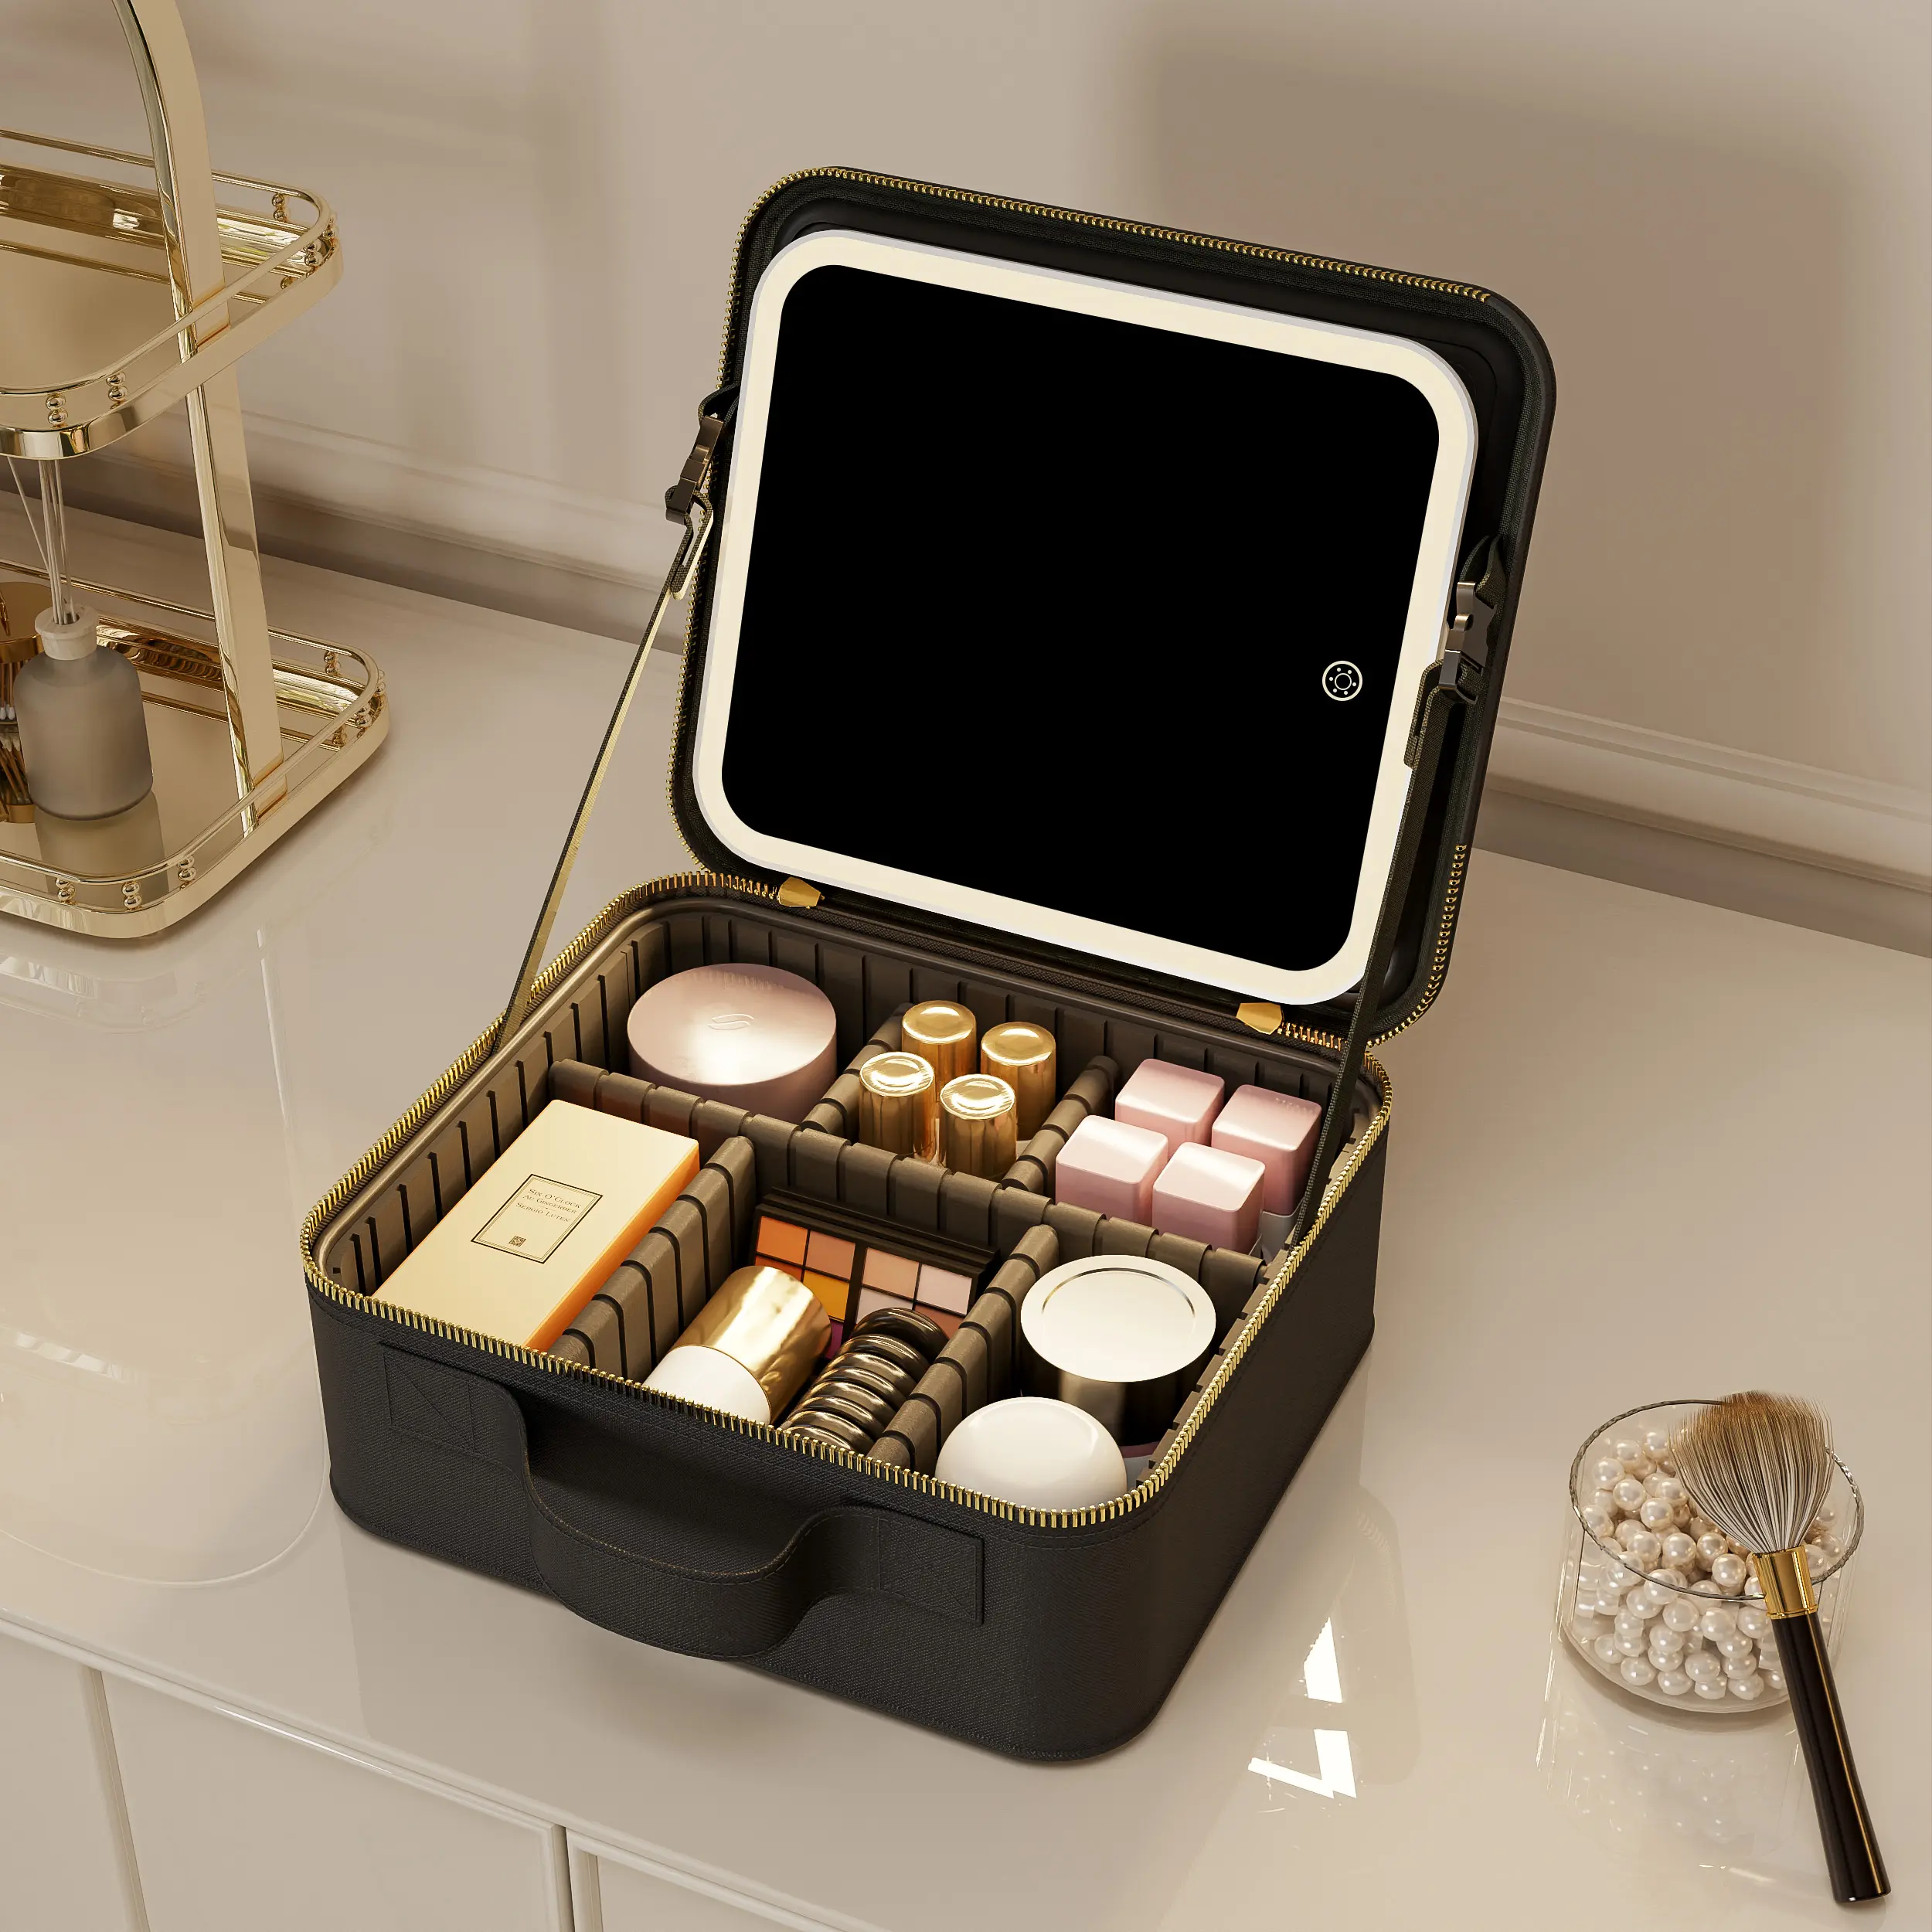 Tragbare Beauty Light Up Reisesp eicher beleuchtete Box Vanity Makeup Bag Case mit LED-Lichts piegel